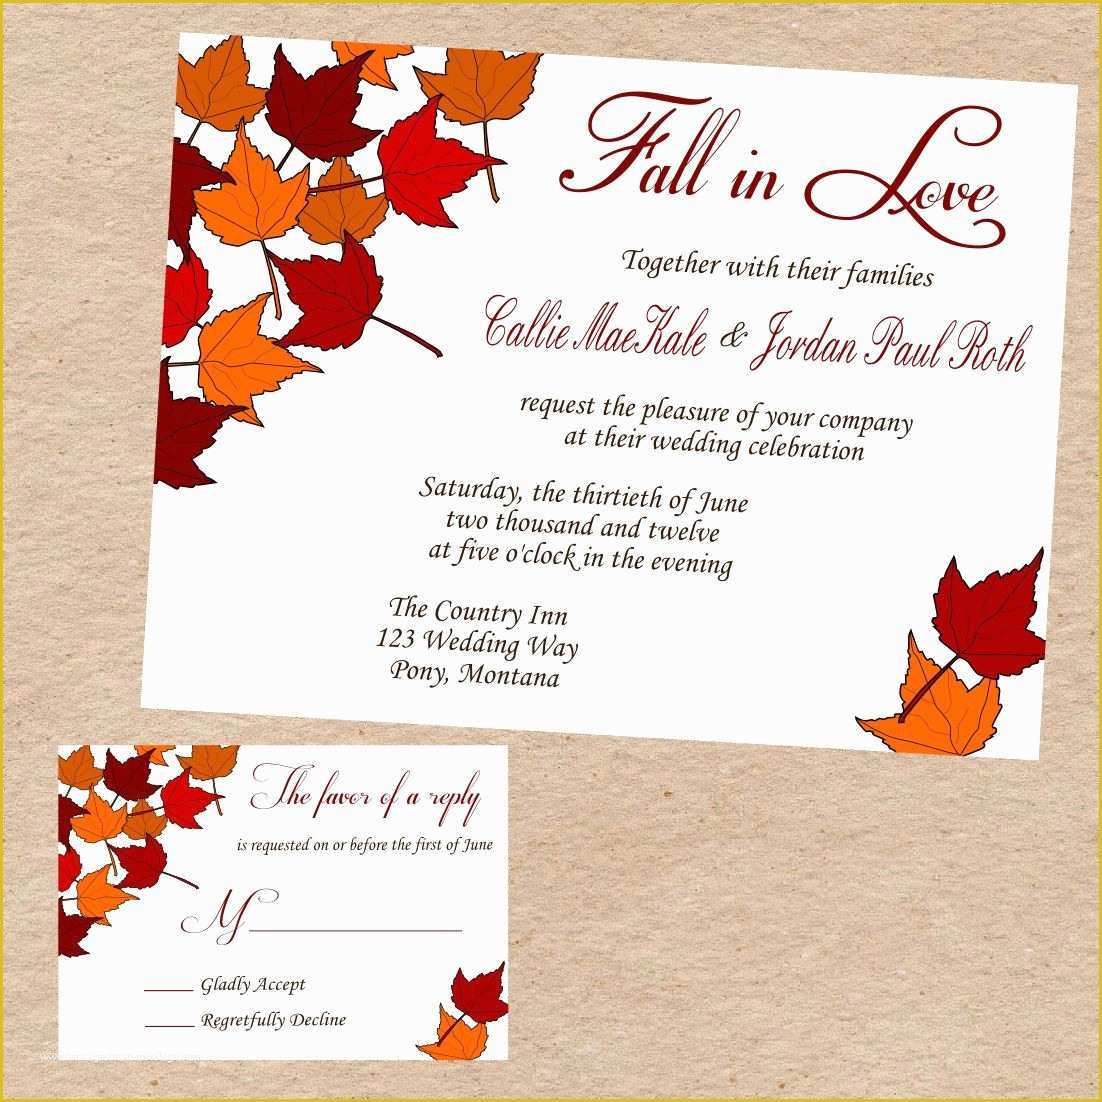 Fall Invitation Templates Free Of Fall Wedding Invitations and Inspiration